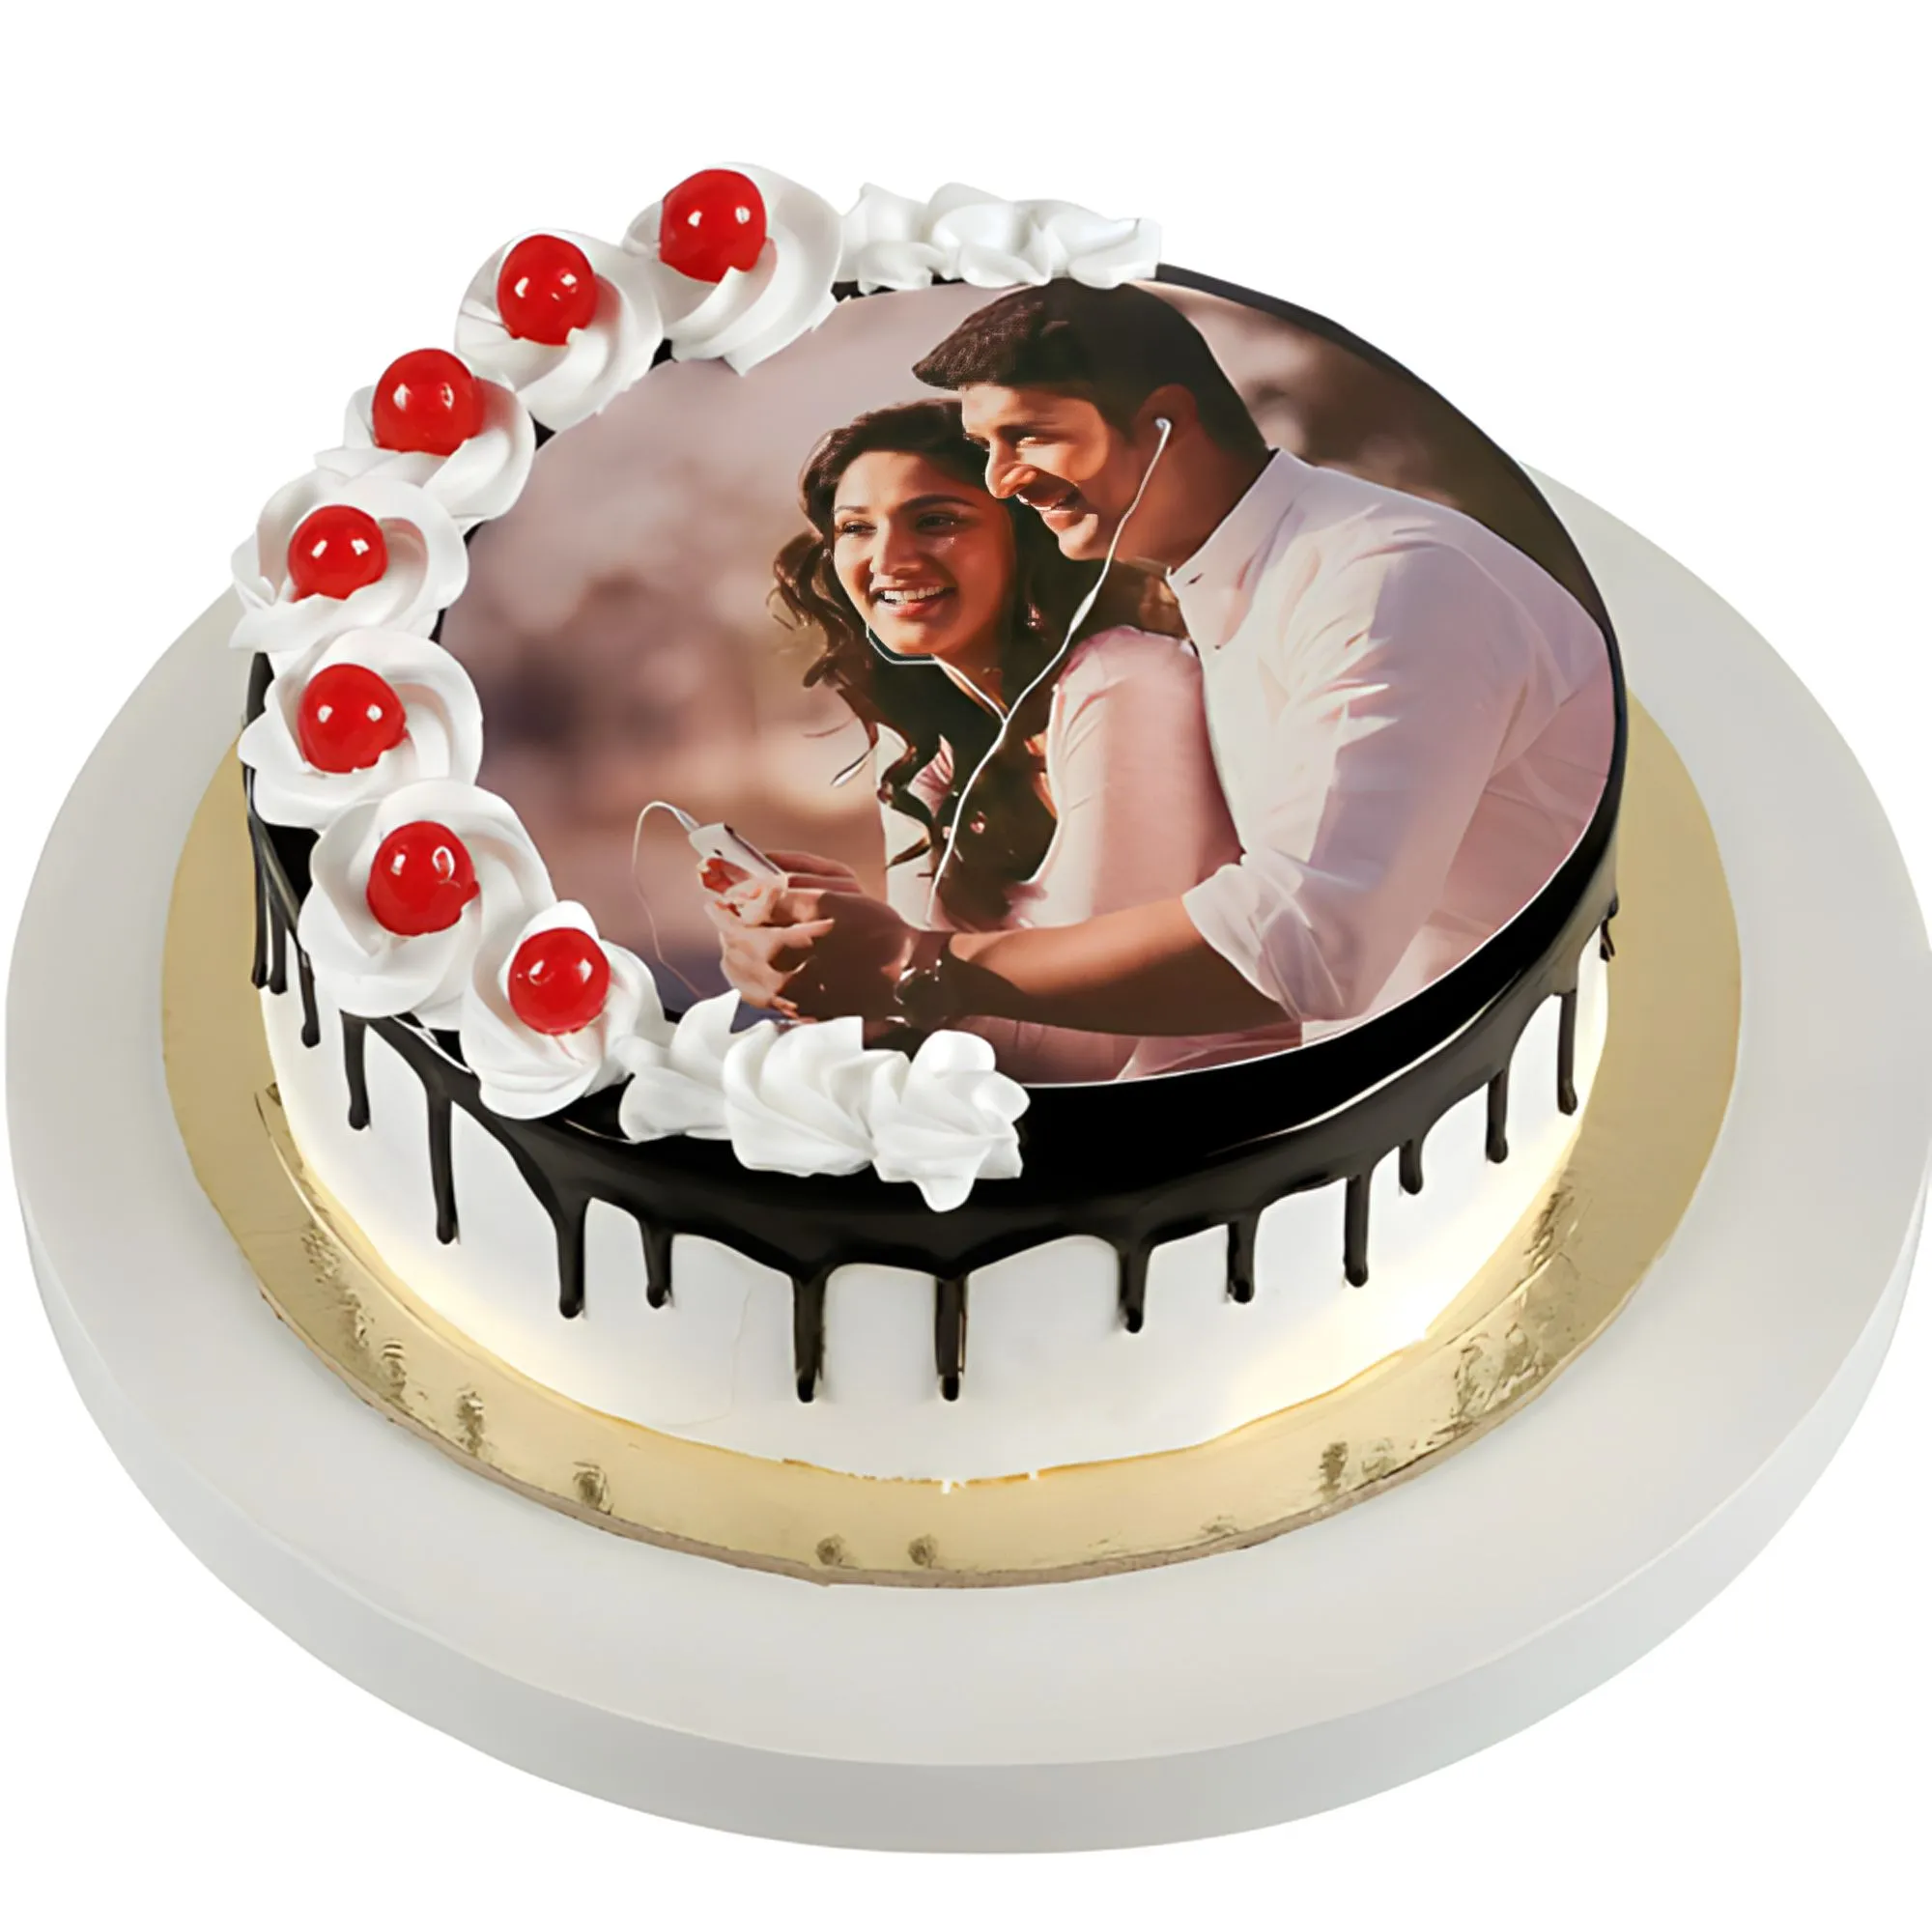 Bond of Love Photo Cake